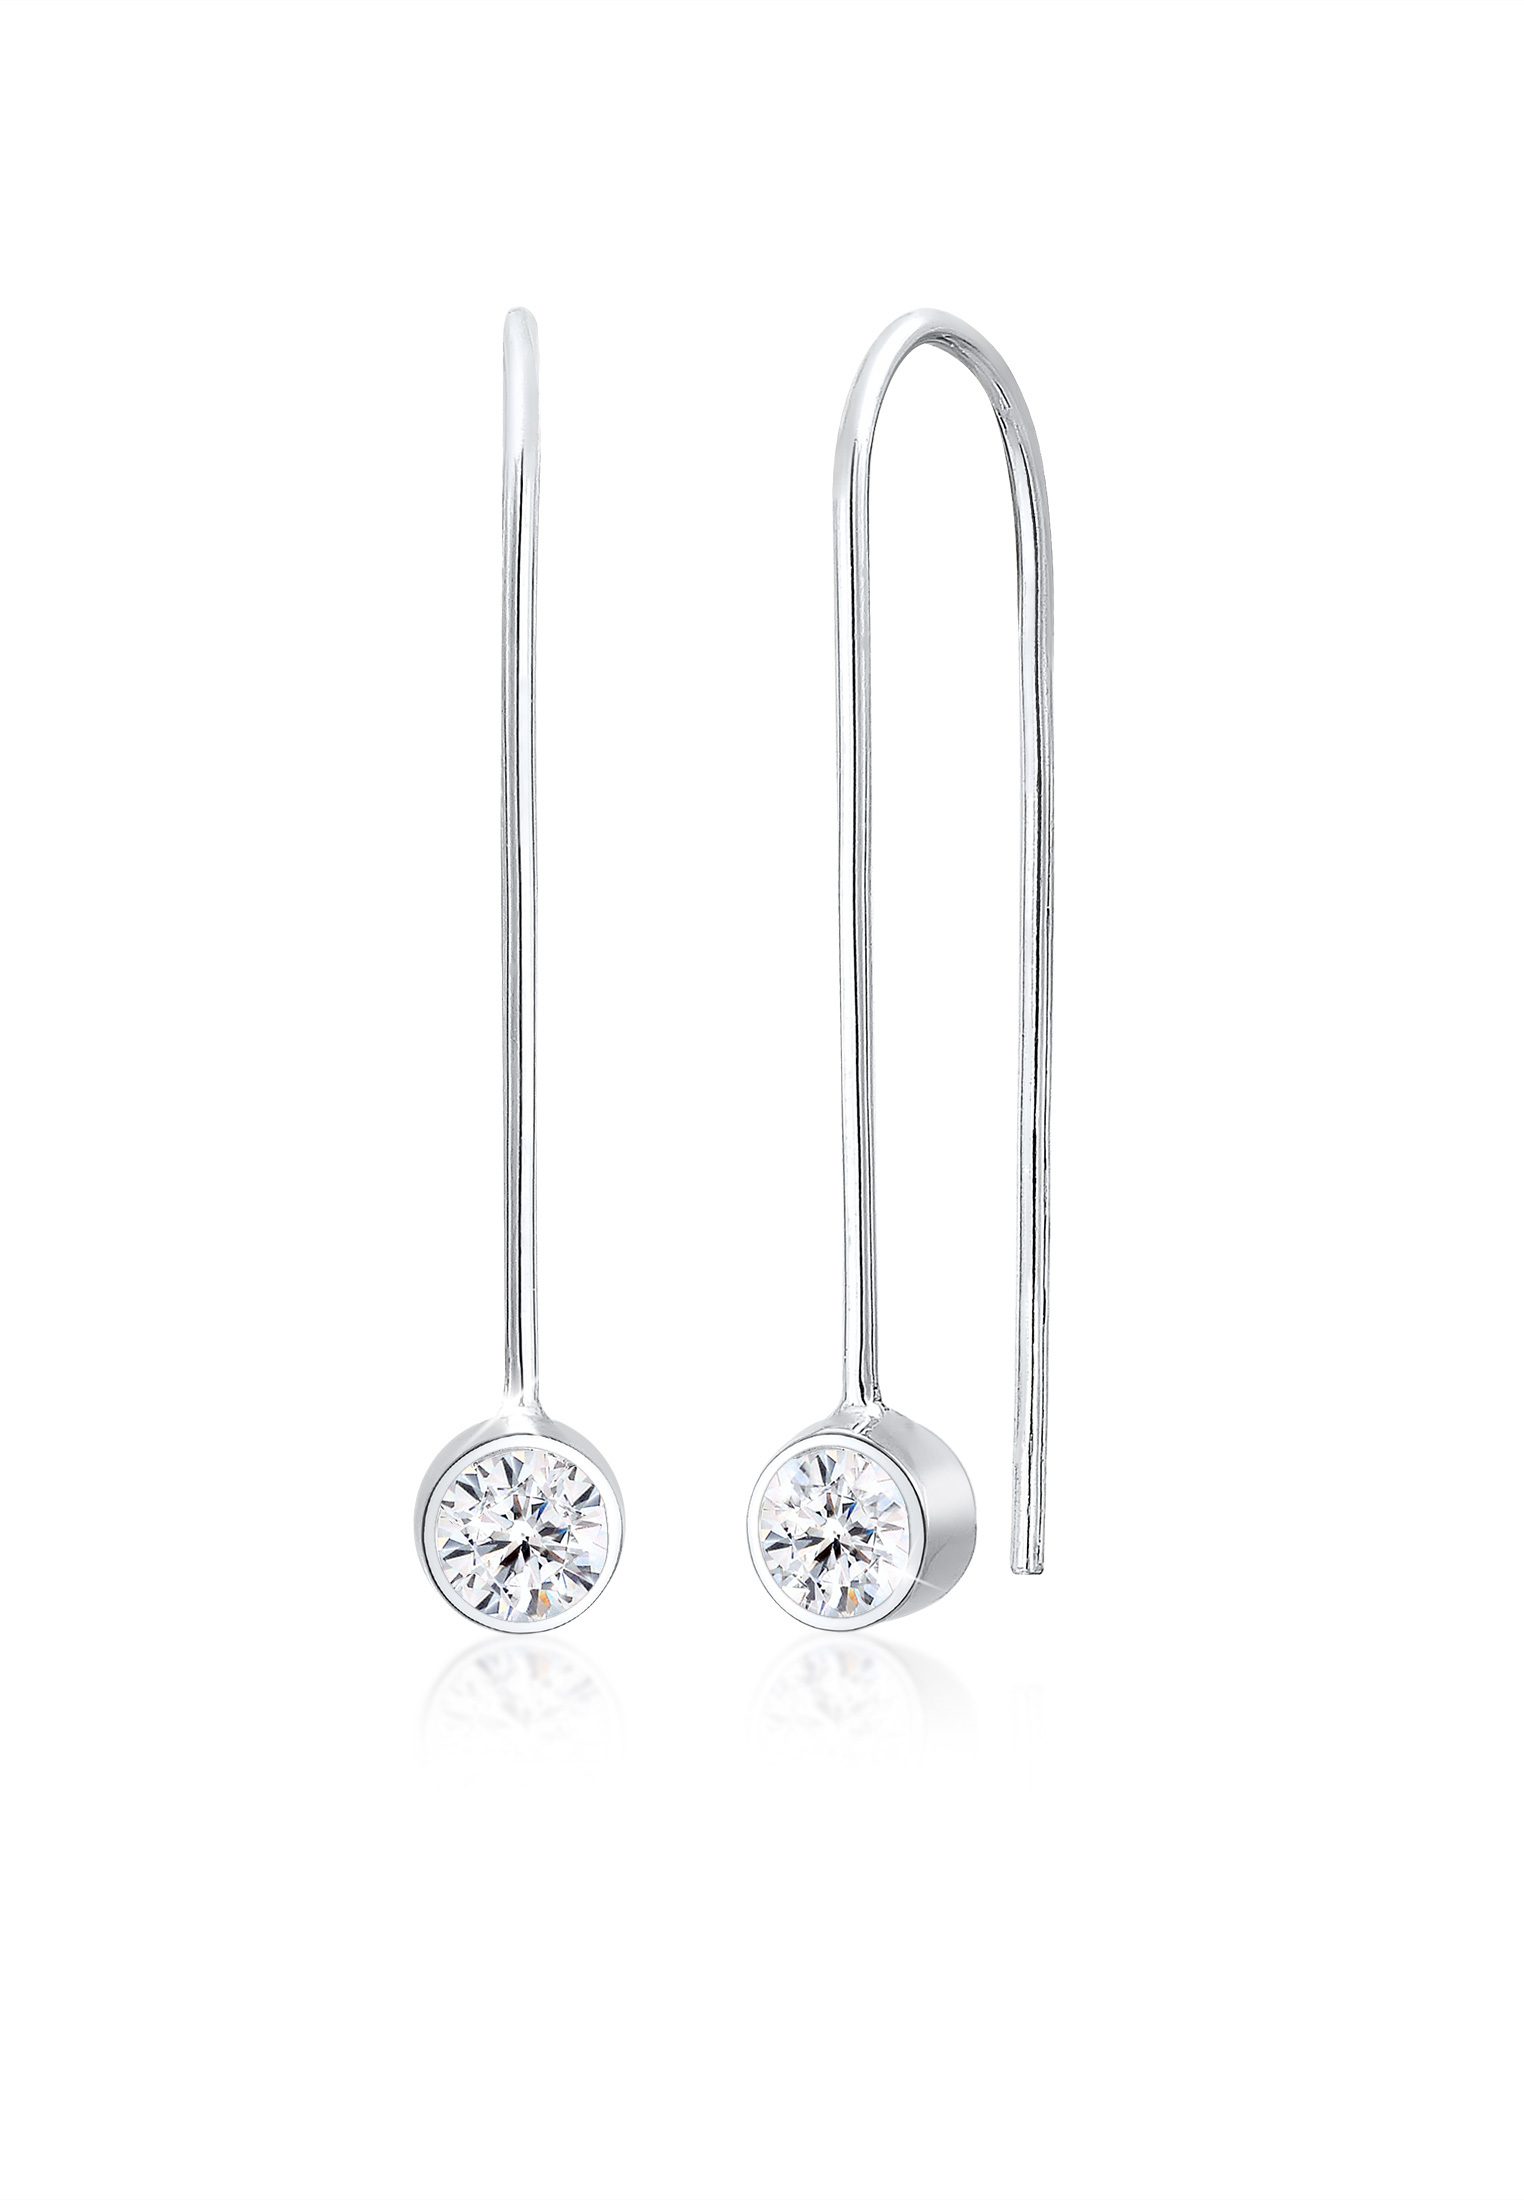 Solitär-Ohrring | Kristall ( Weiß ) | 925er Sterling Silber